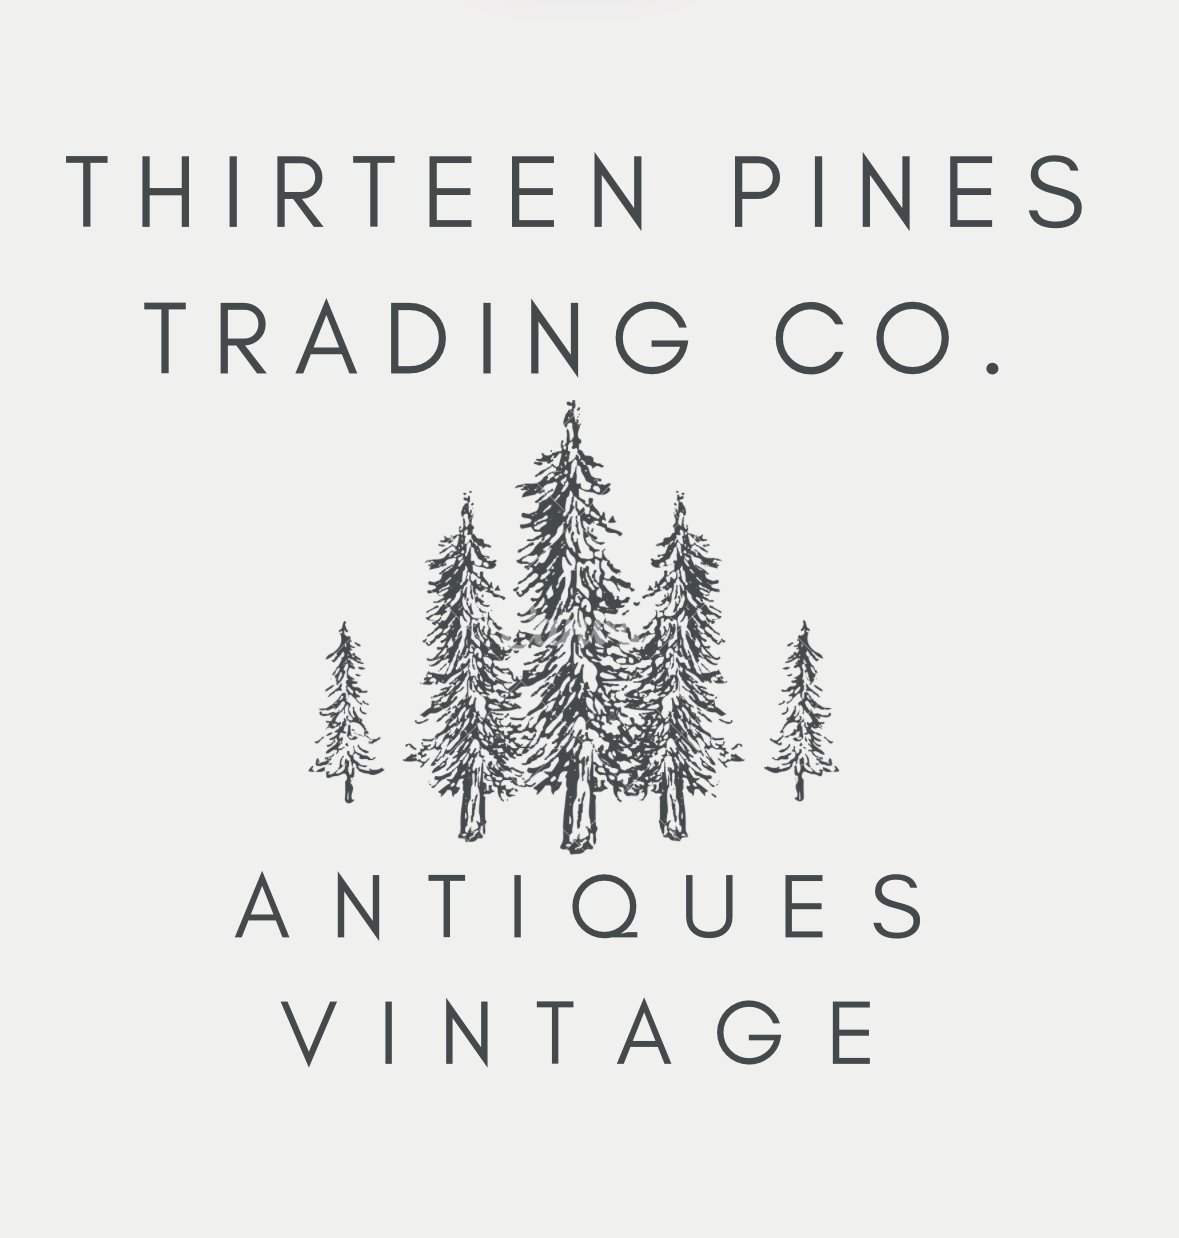 Thirteen Pines Trading Co.